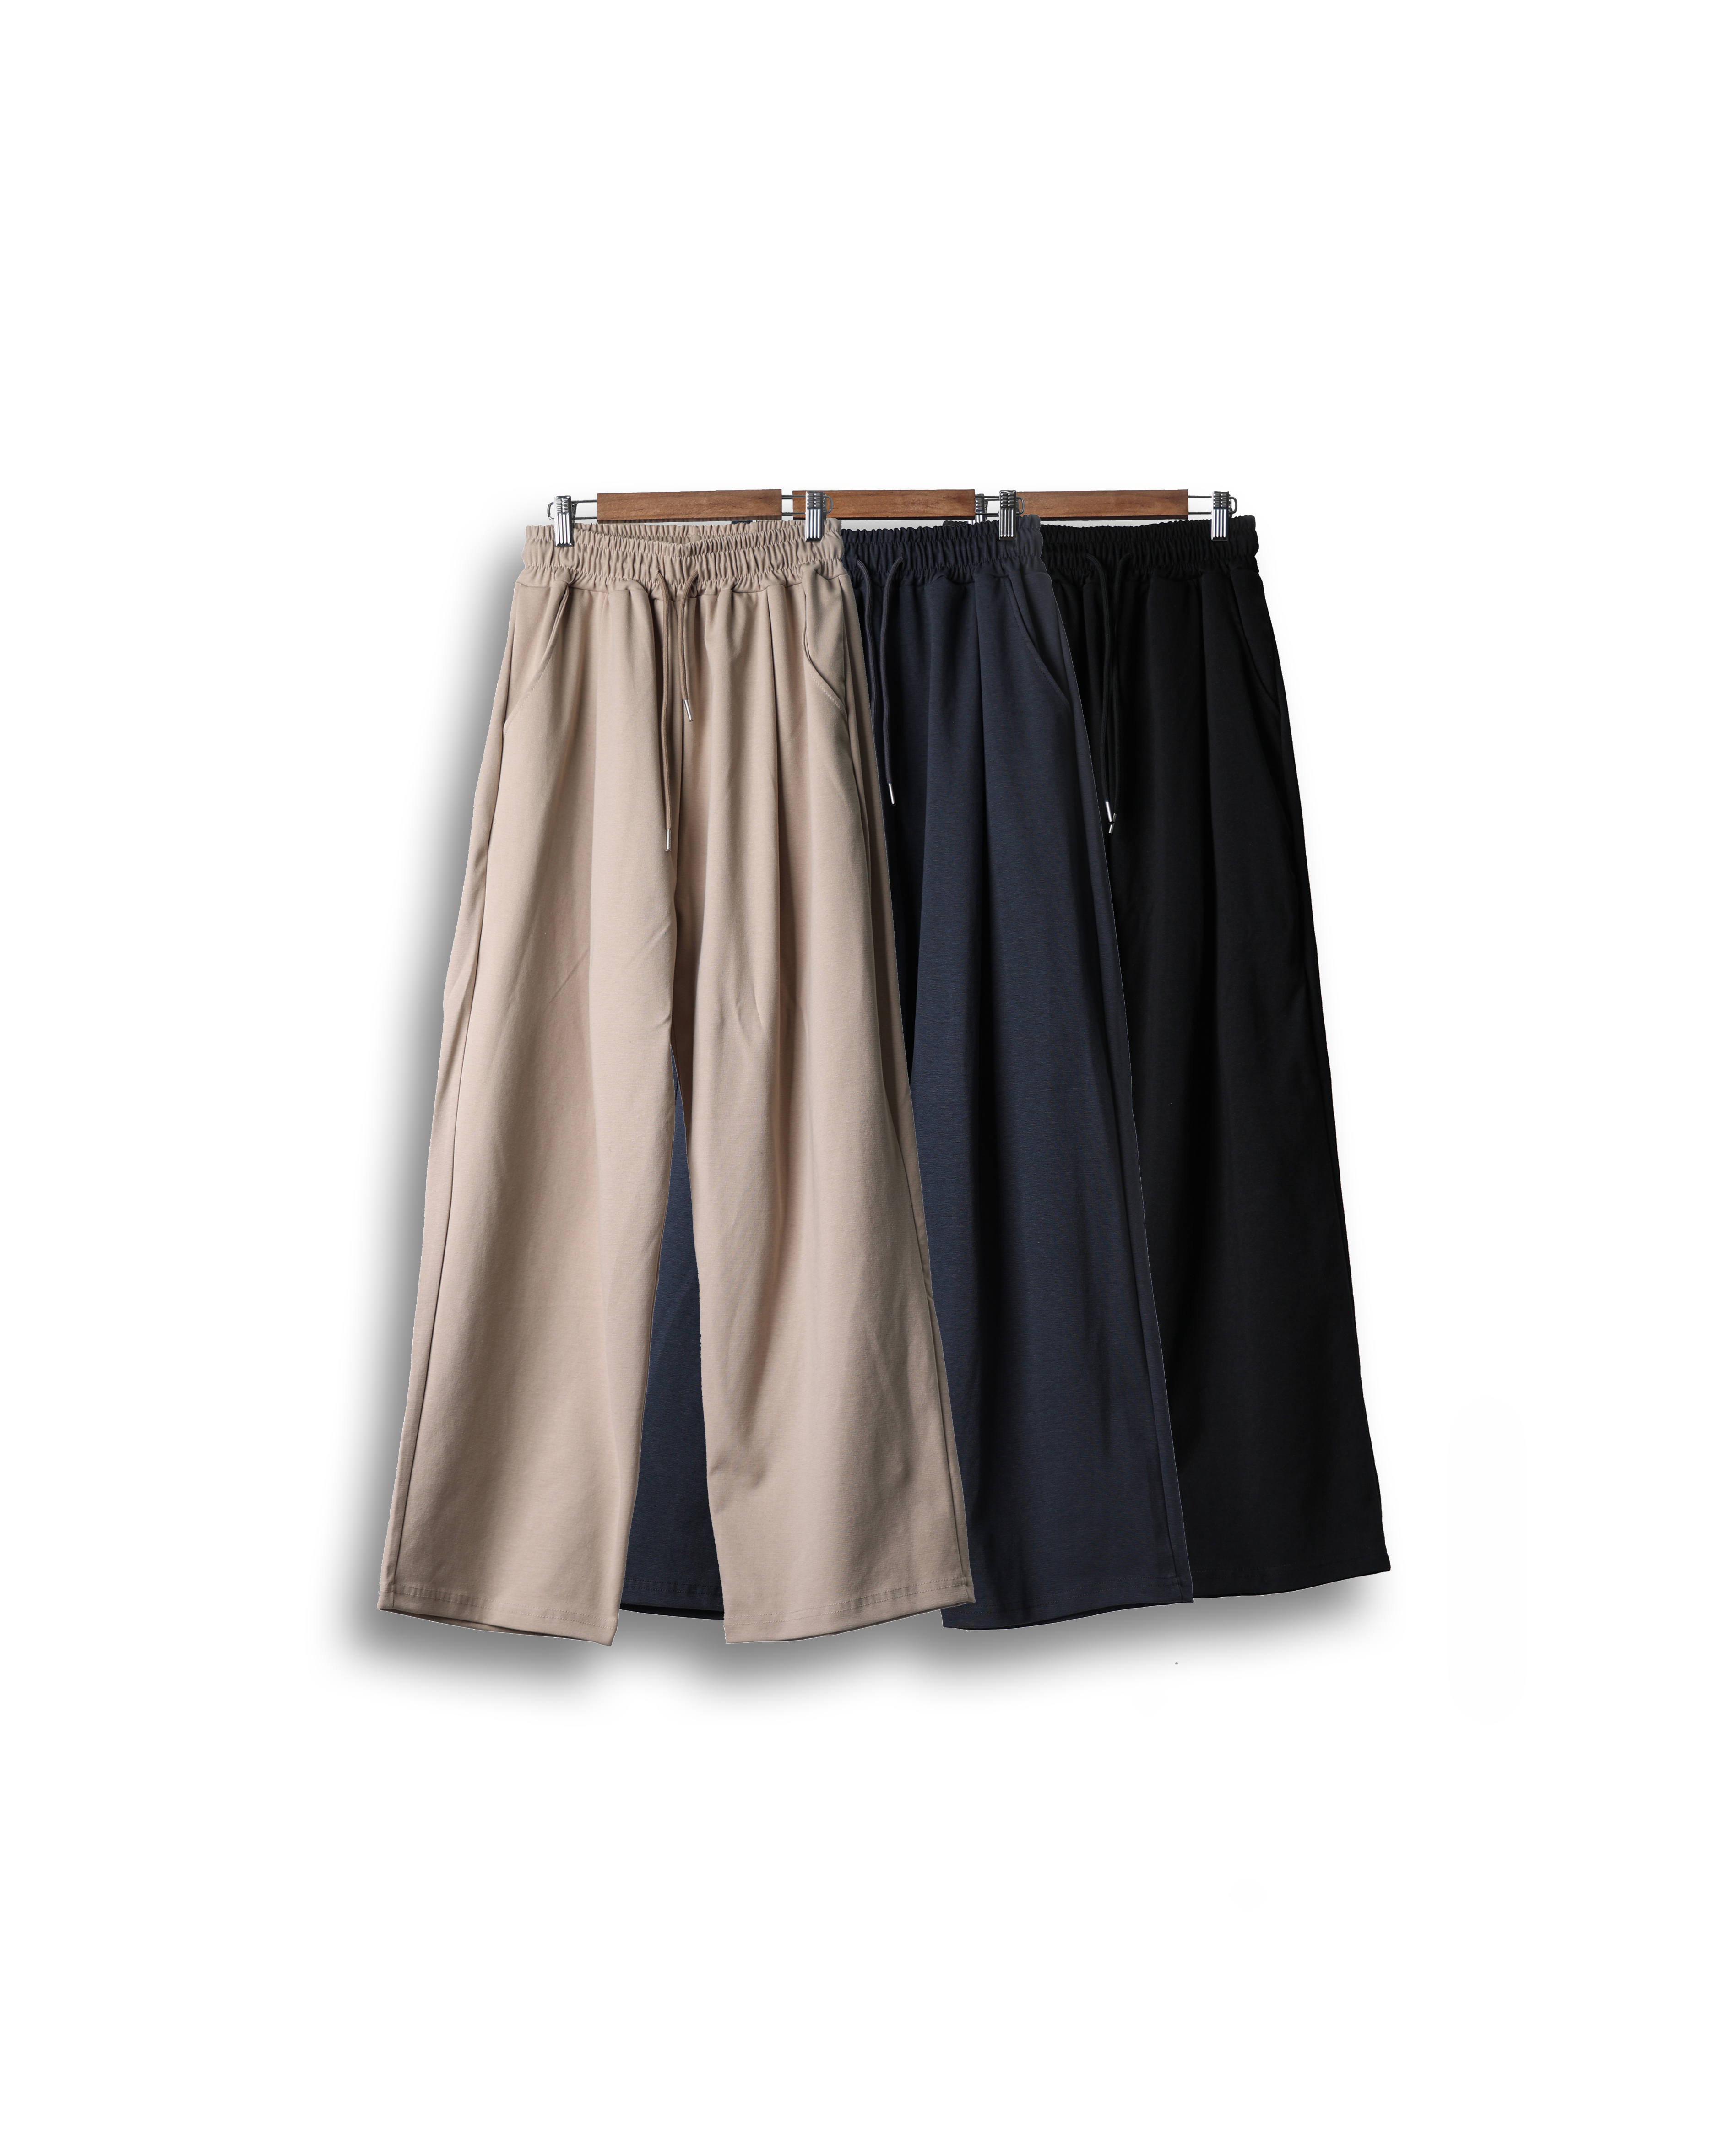 NOOR Triple Pleats Flow Wide Pants (Black/Charcoal/Beige)